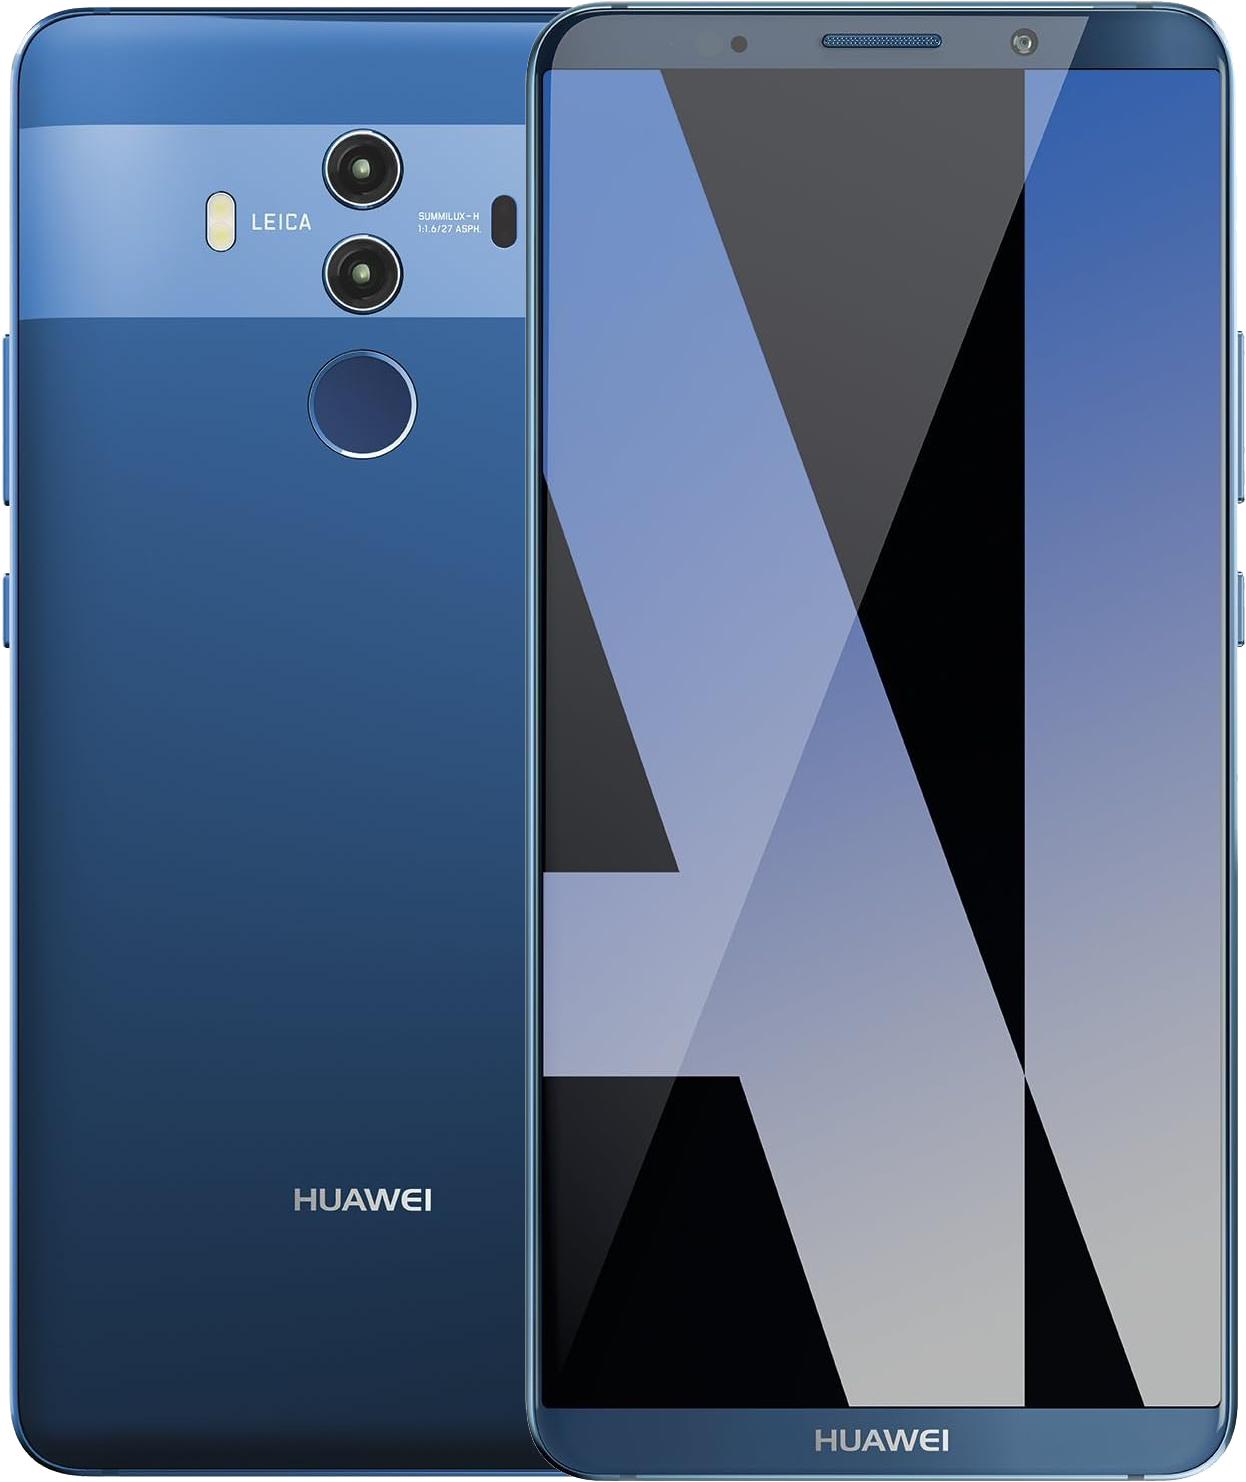 Huawei Mate 10 Pro blau - Onhe Vertrag